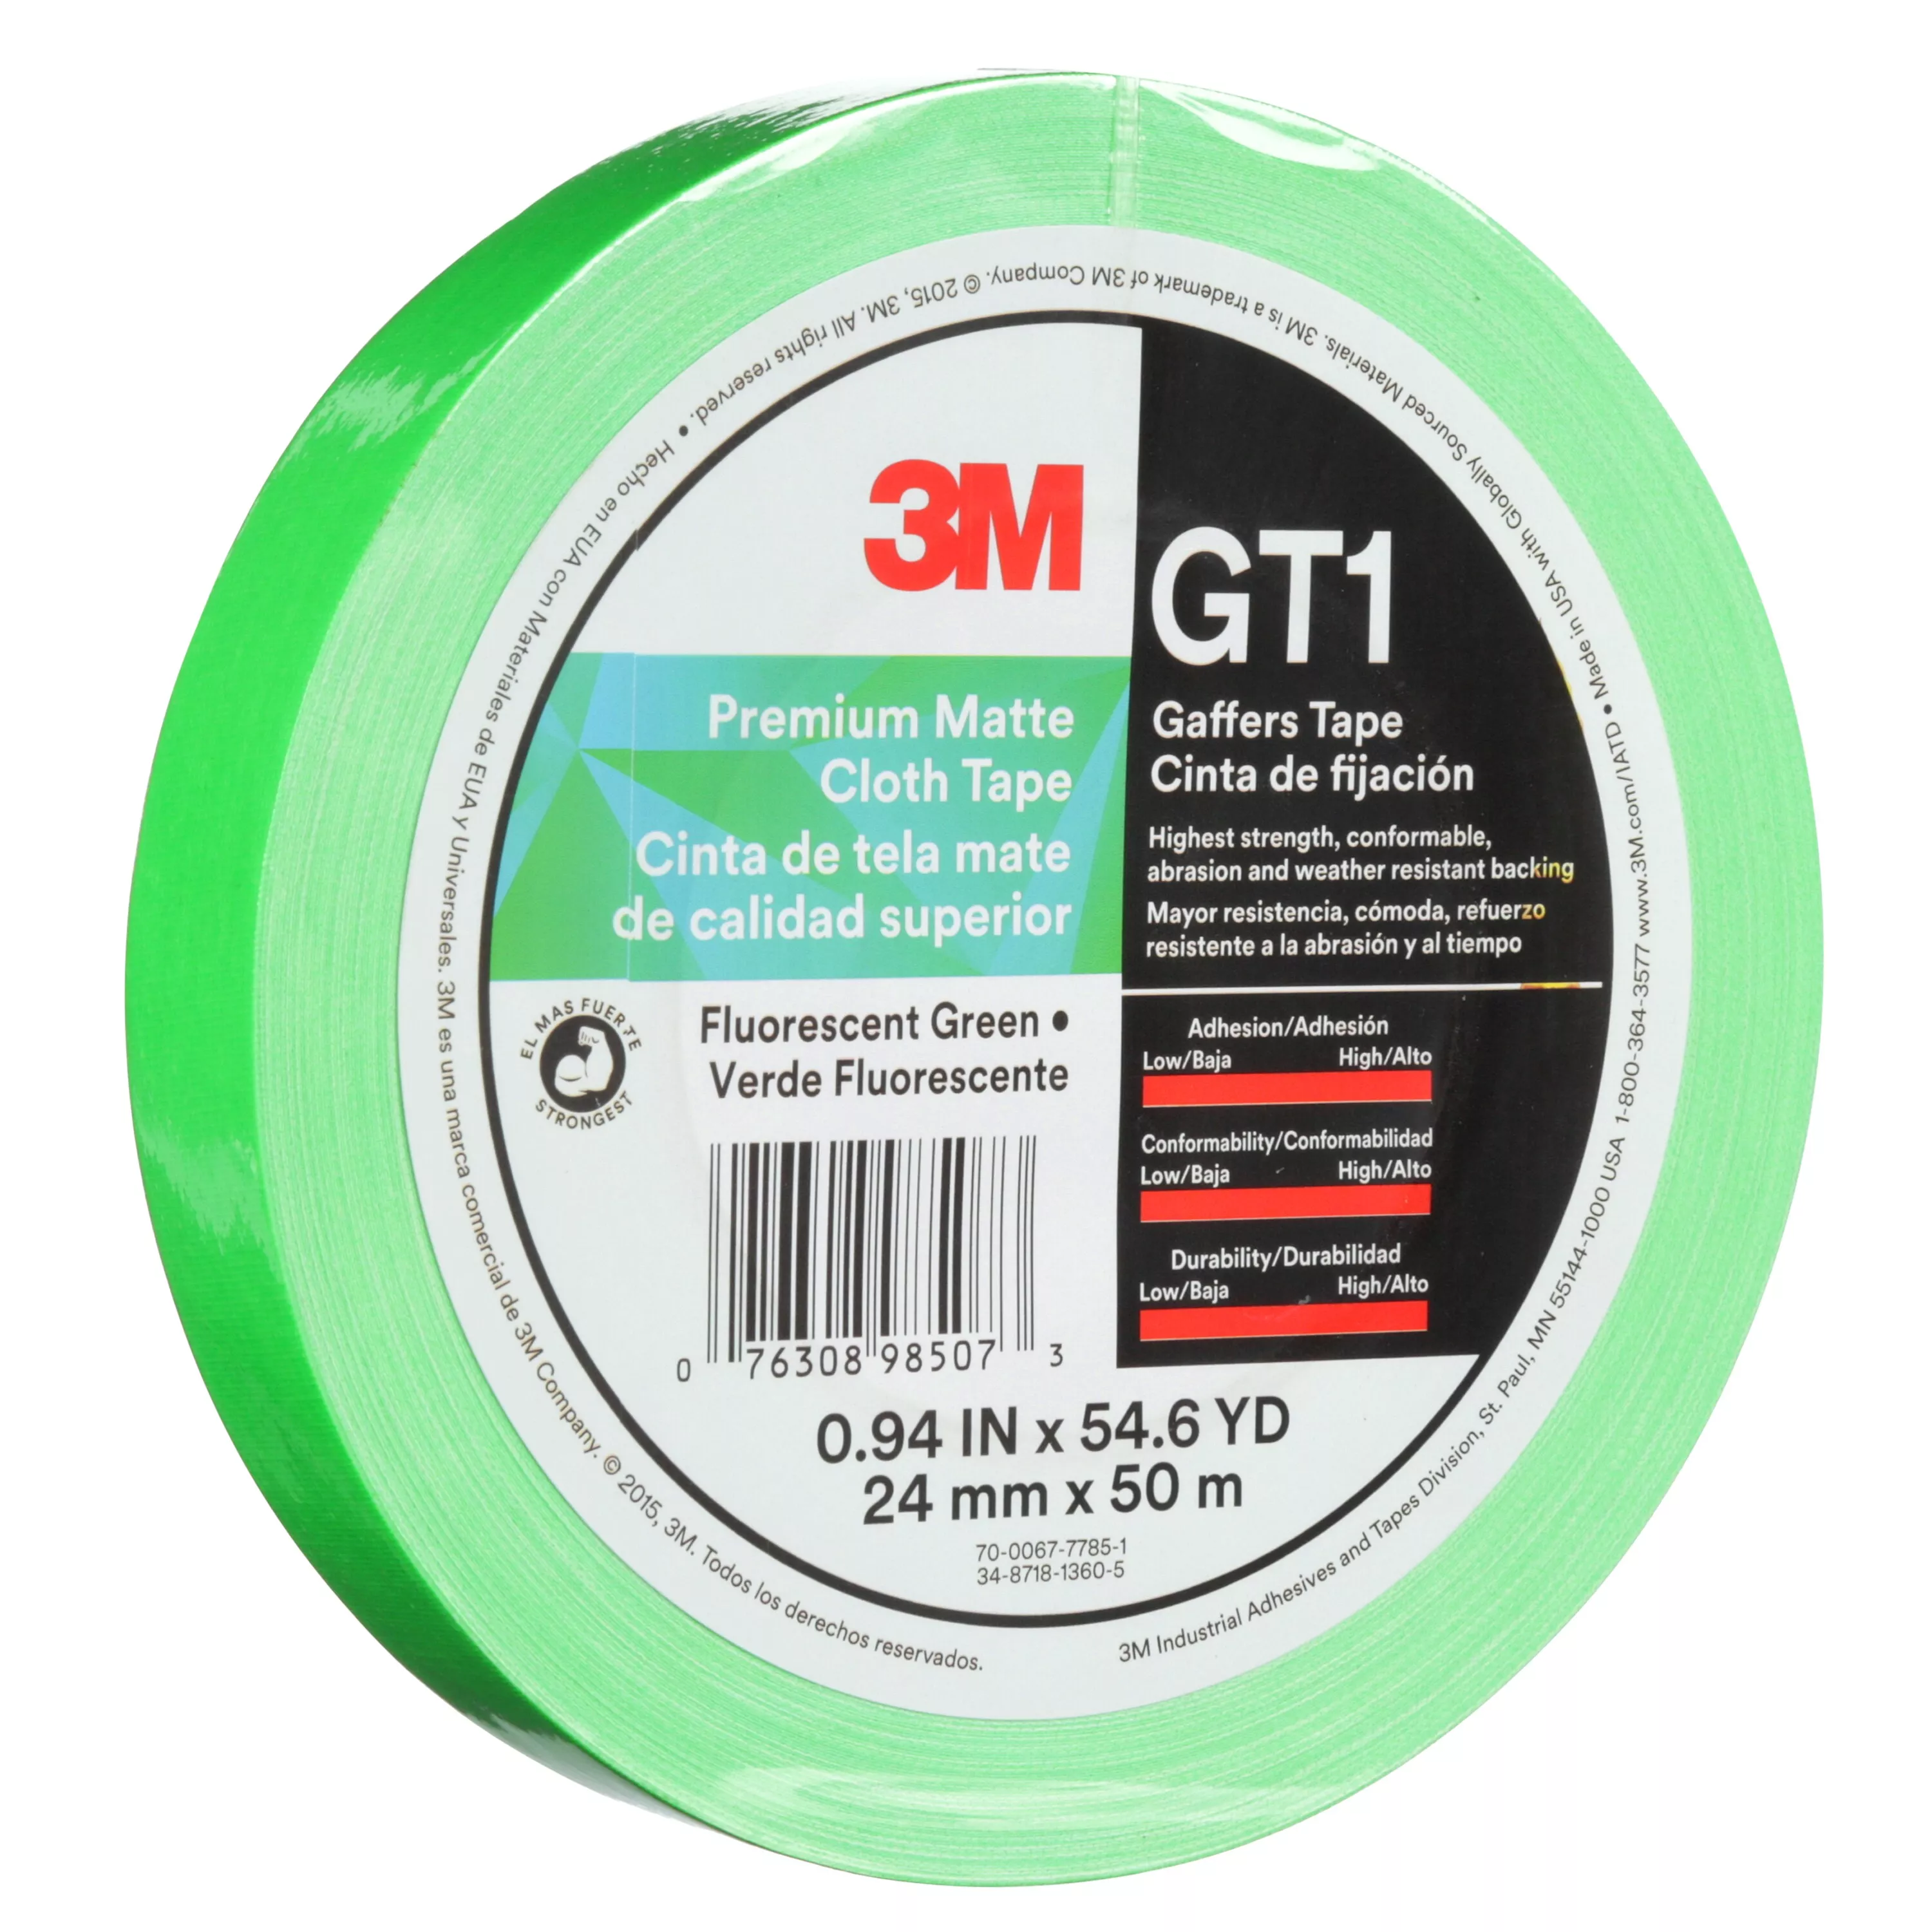 3M™ Premium Matte Cloth (Gaffers) Tape GT1, Fluorescent Green, 24 mm x
50 m, 11 mil, 48/Case